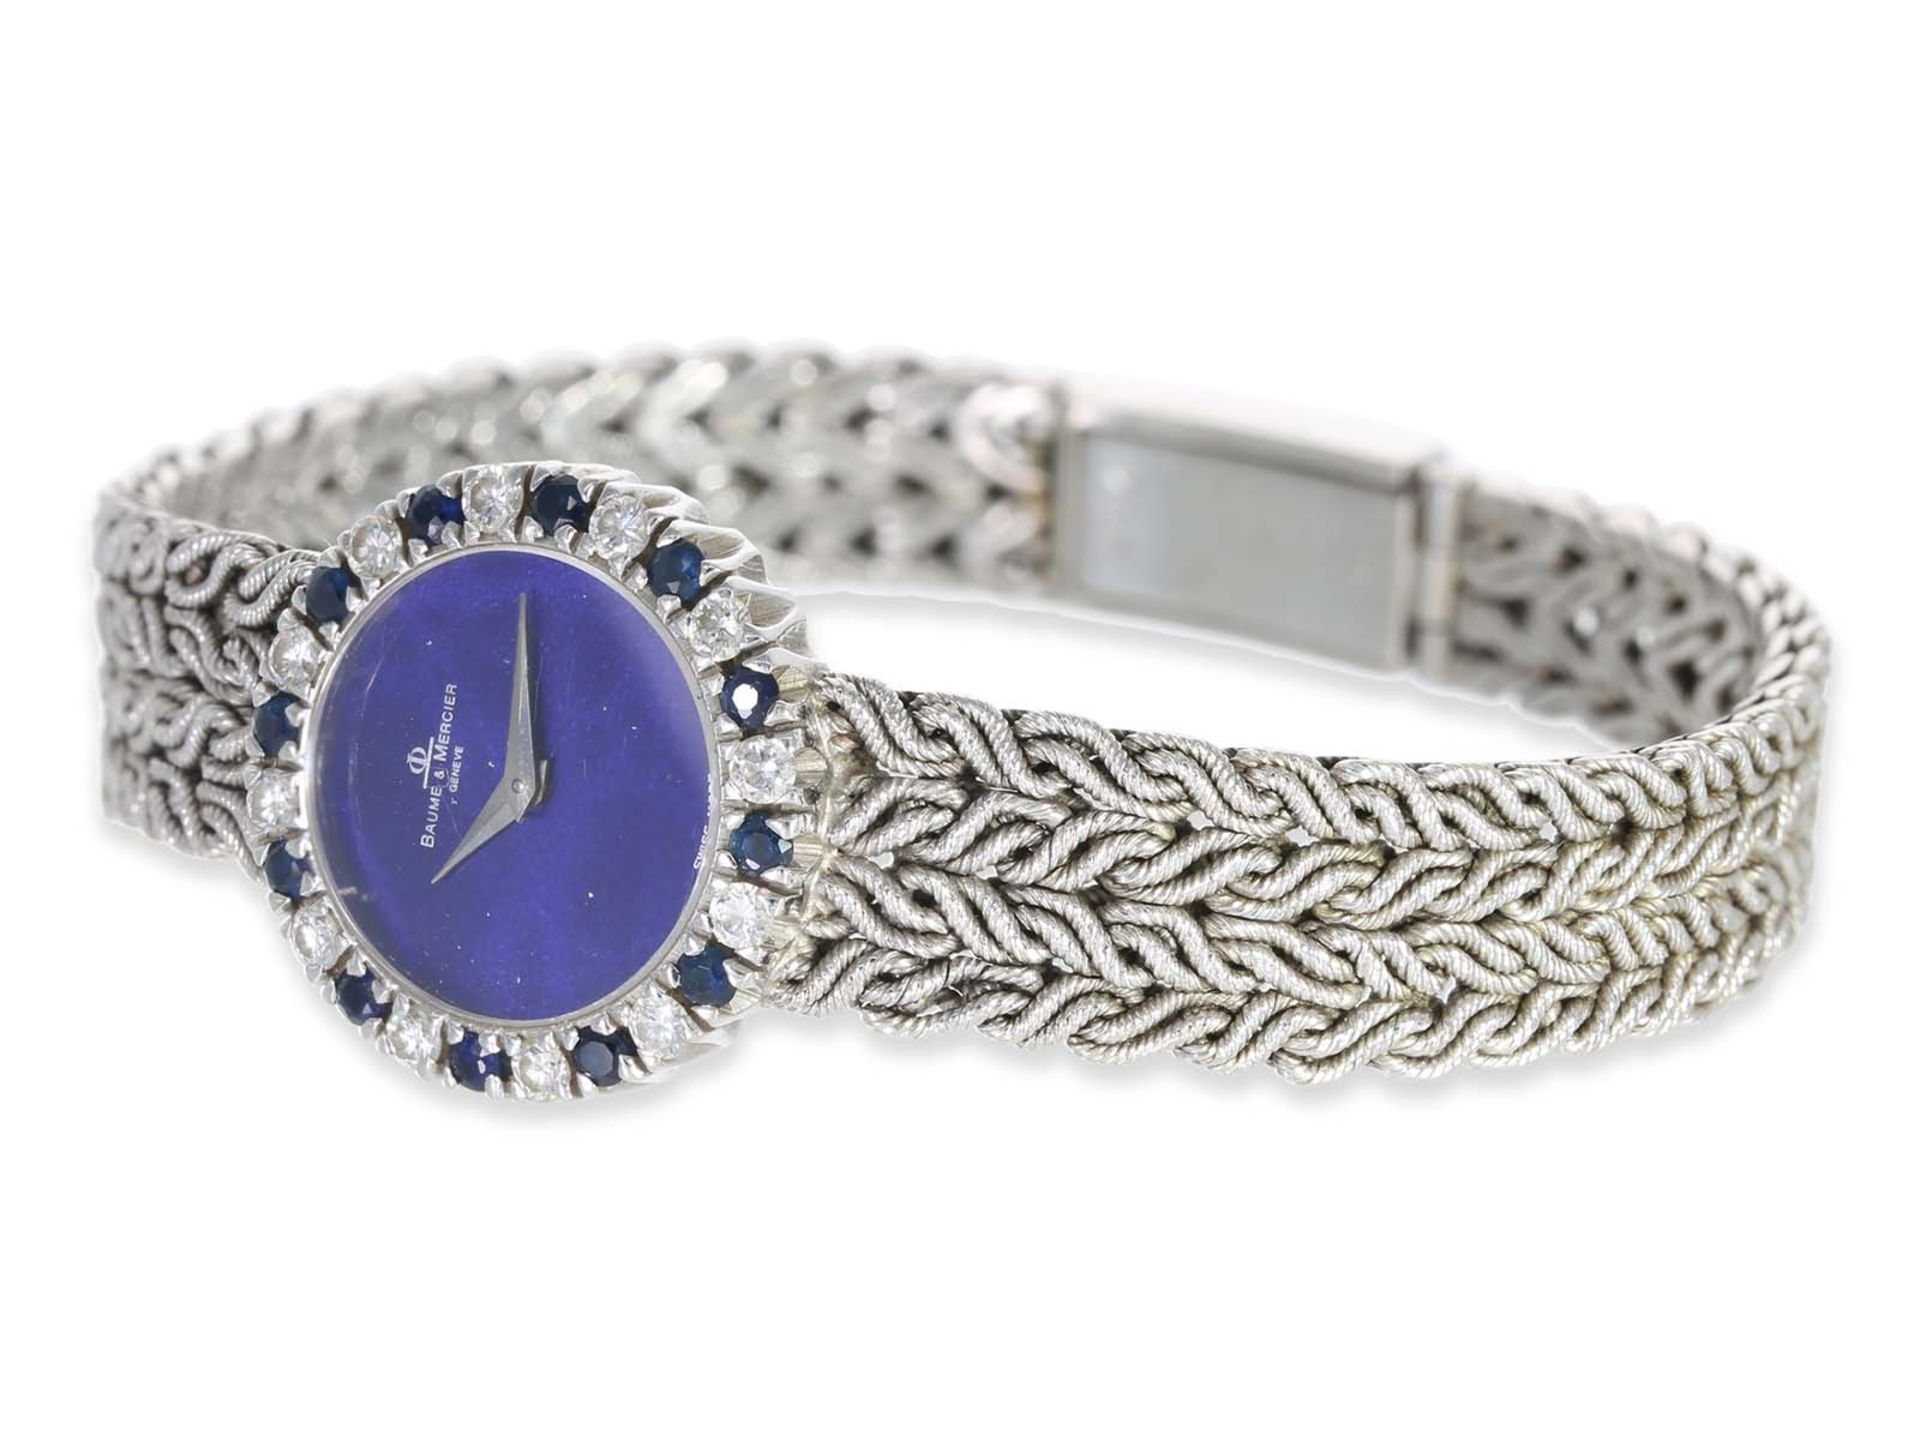 Wrist watch: high quality vintage Baume & Mercier ladies watch with diamond/sapphire bezel, total 1. - Image 3 of 4